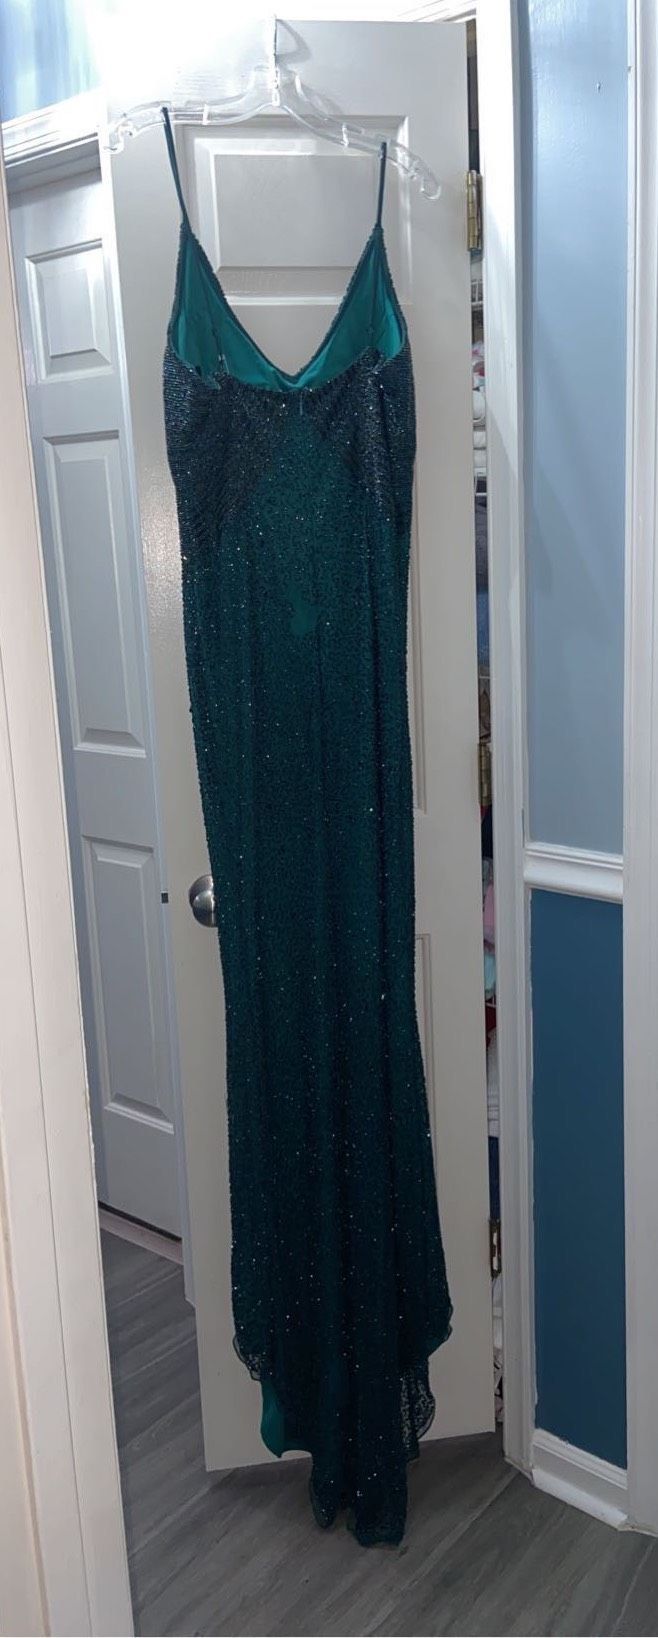 Ashley Lauren Size 12 Prom Emerald Green Side Slit Dress on Queenly